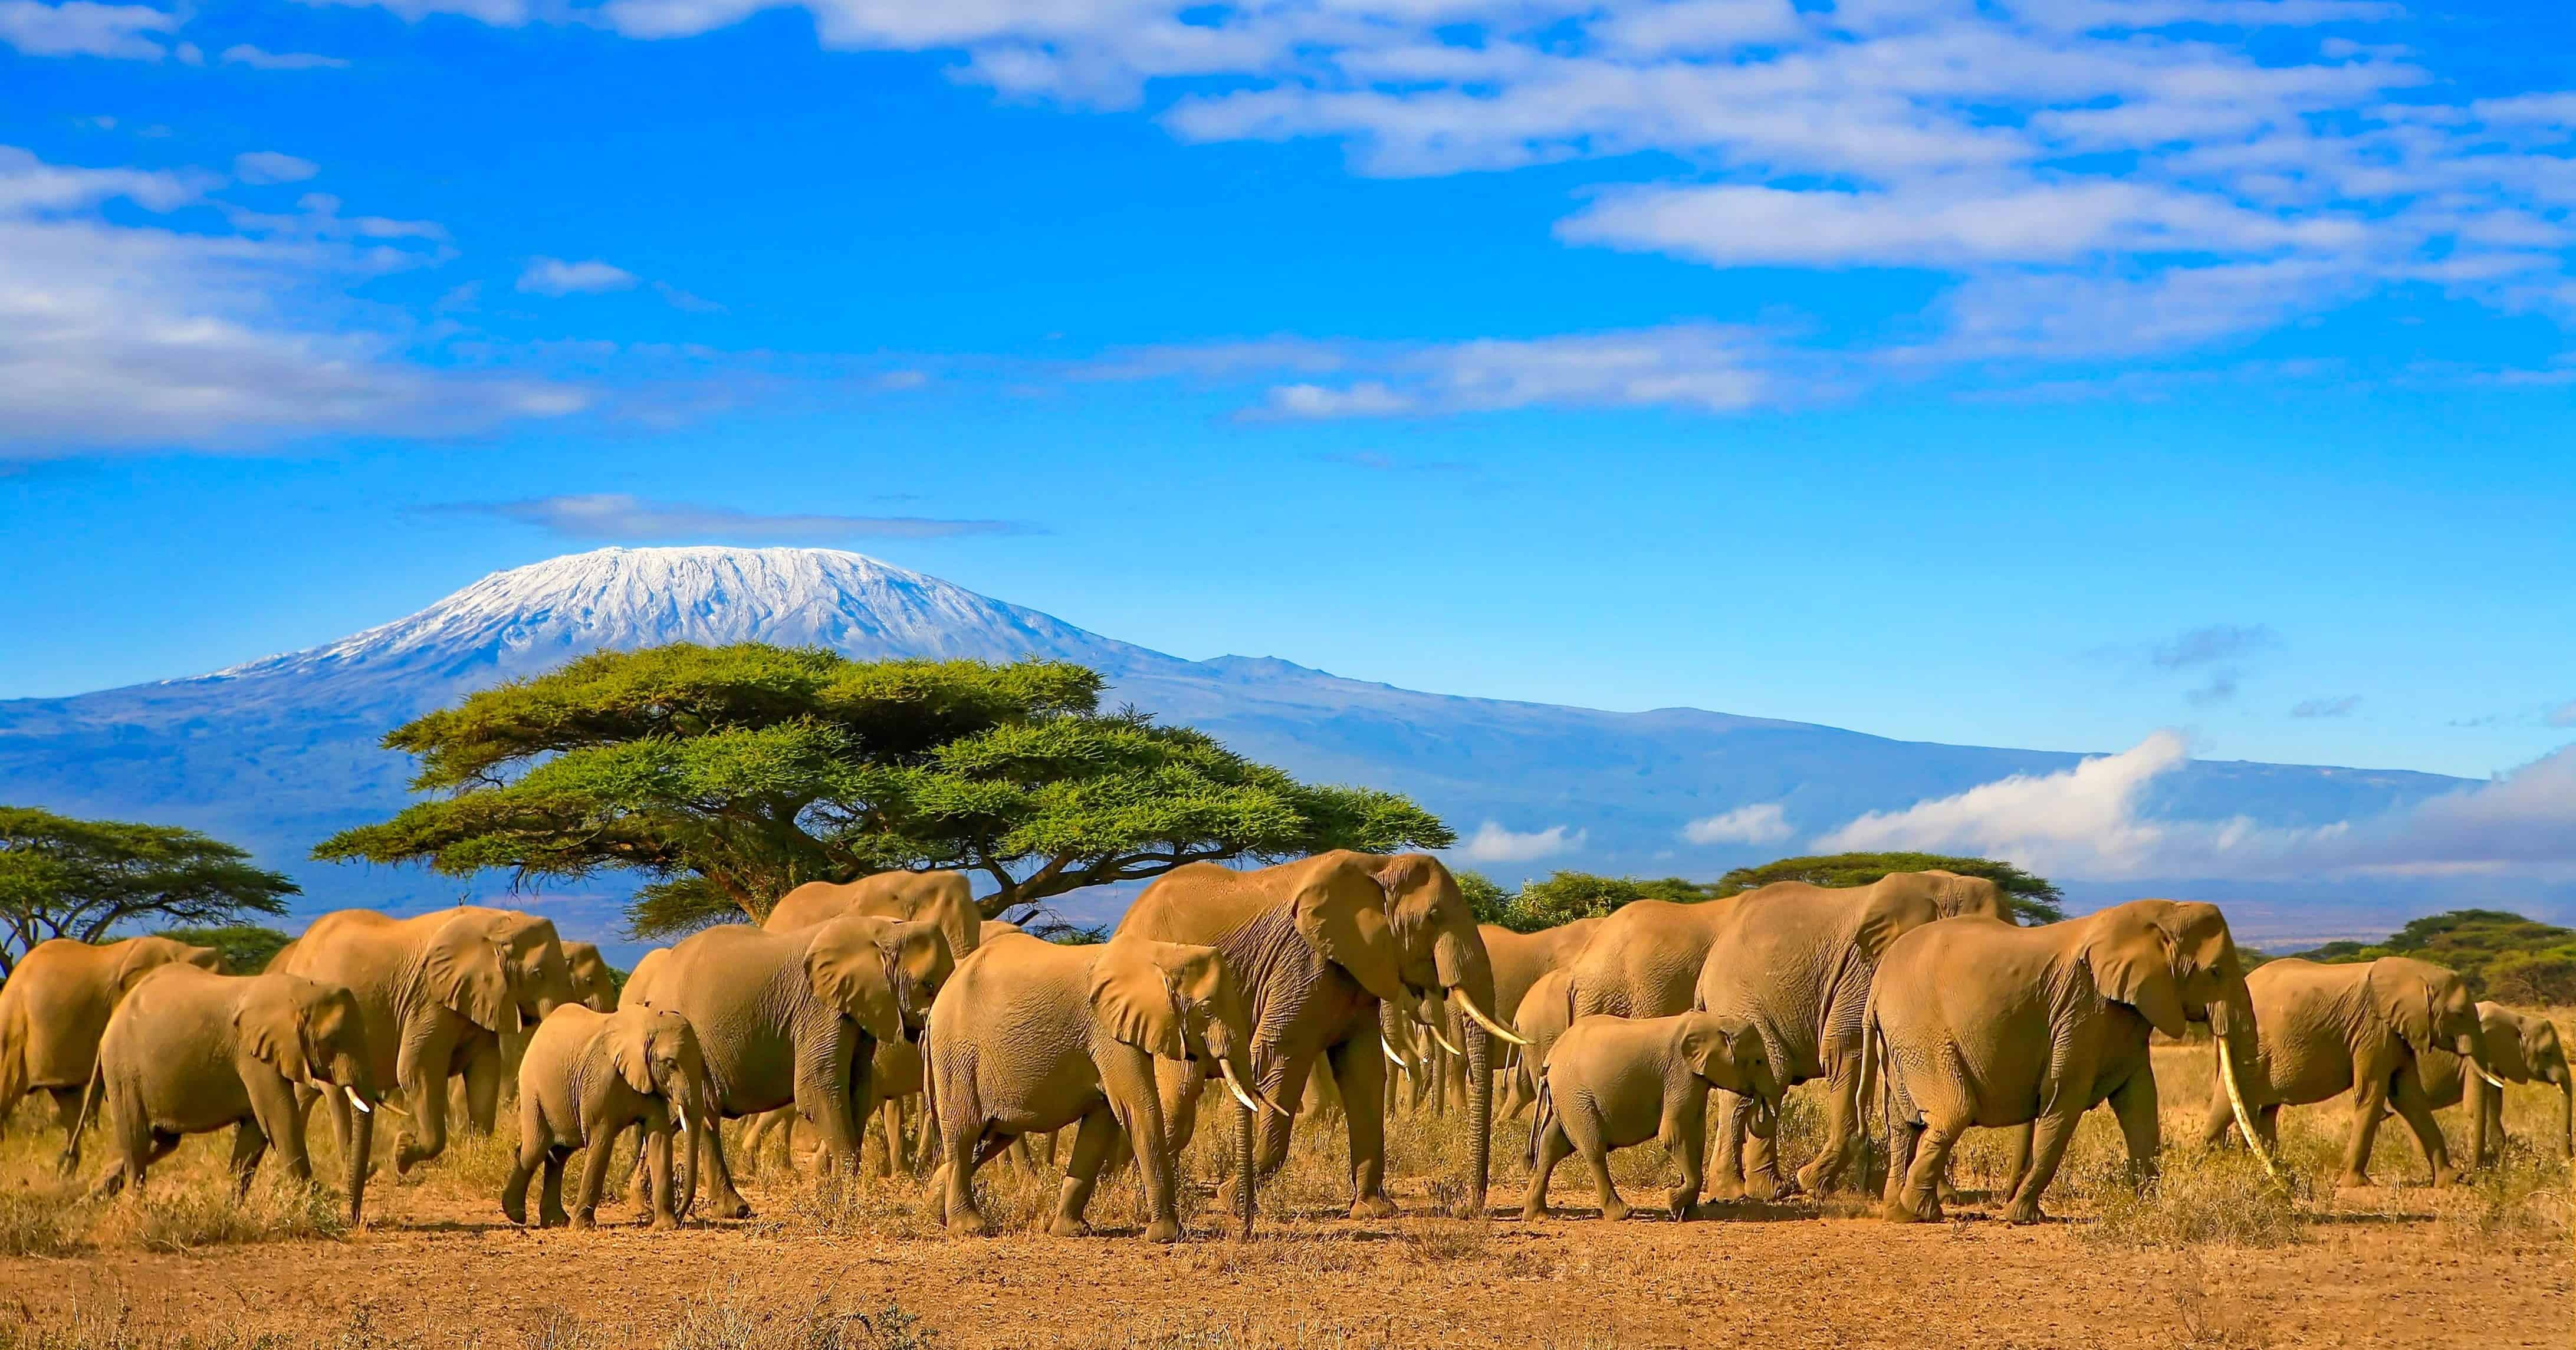 Elephants on a Safari